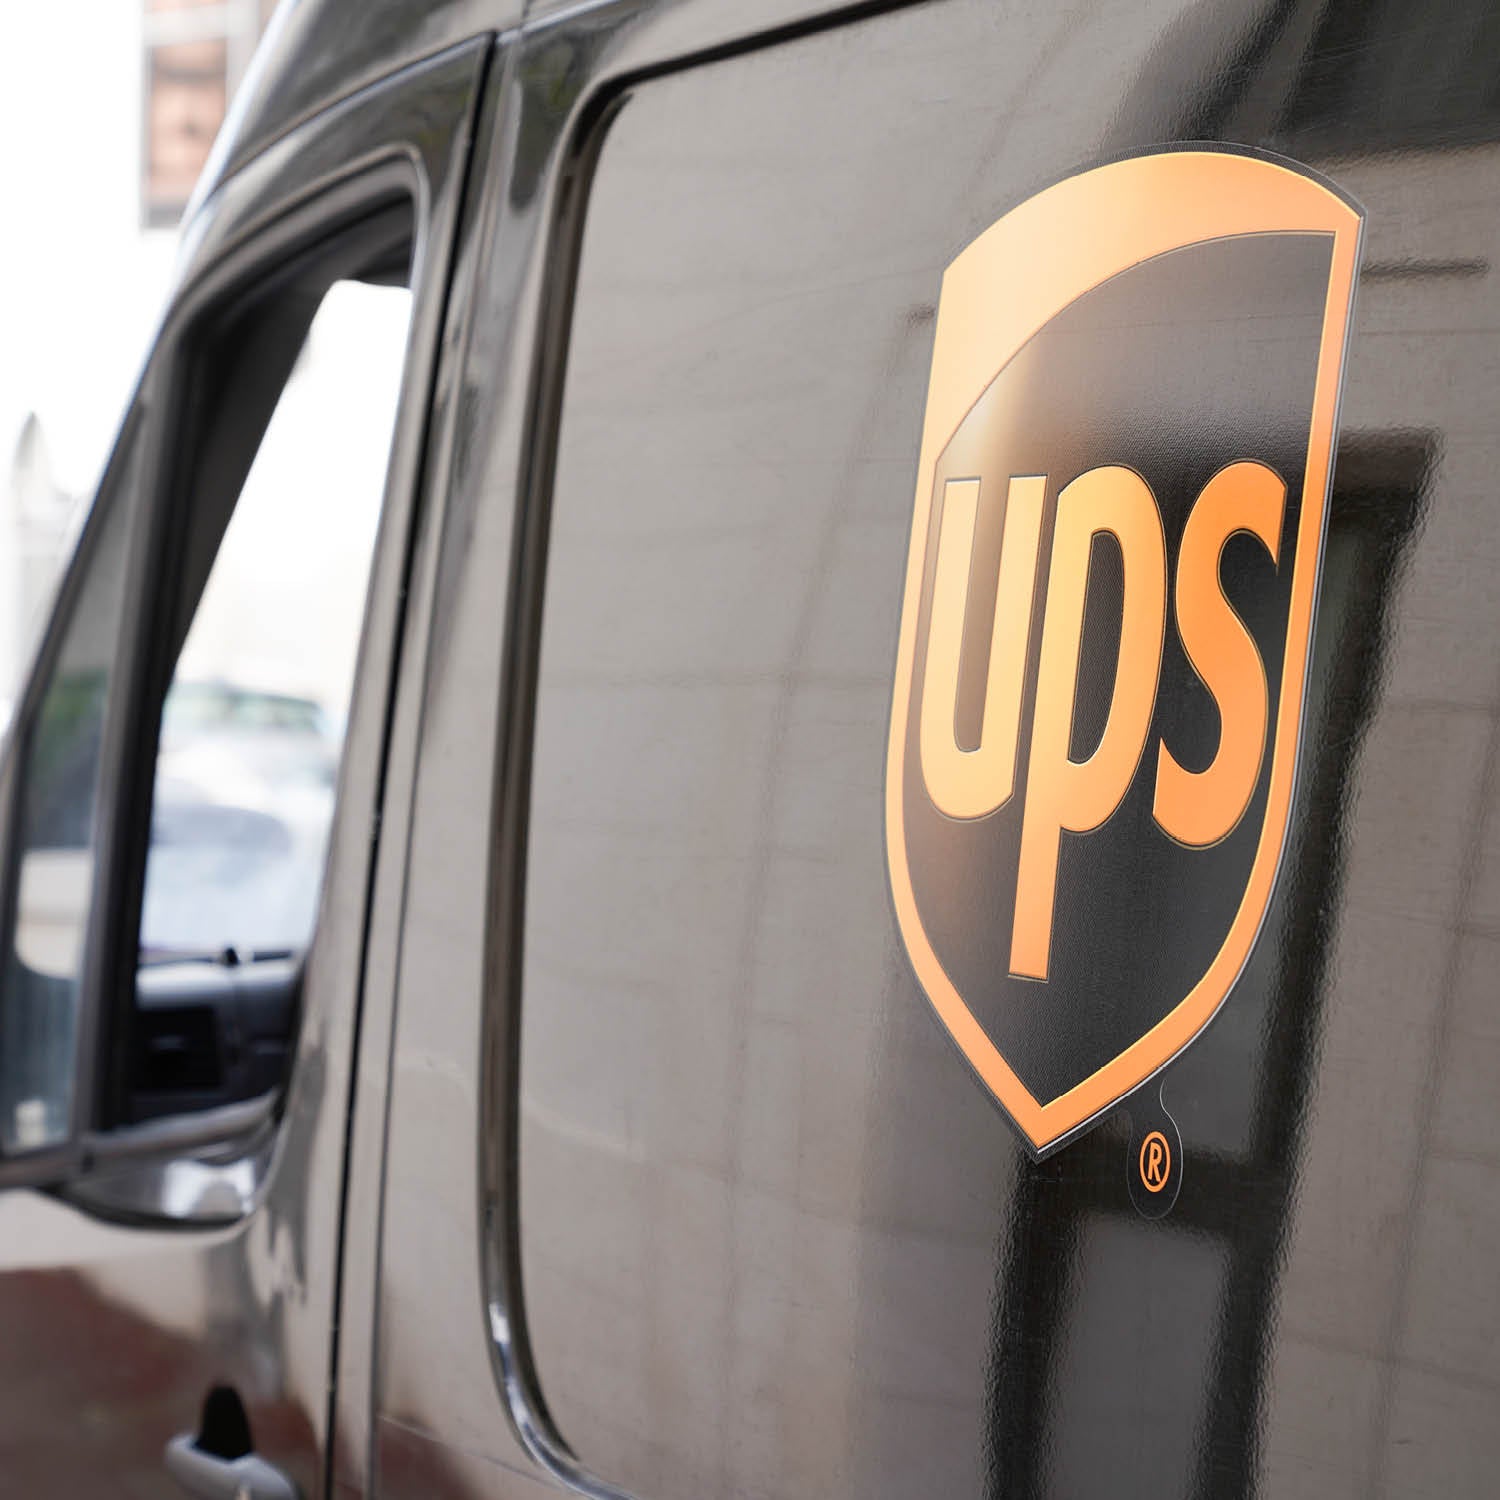 UPS used to transport flowers - DBAndrea